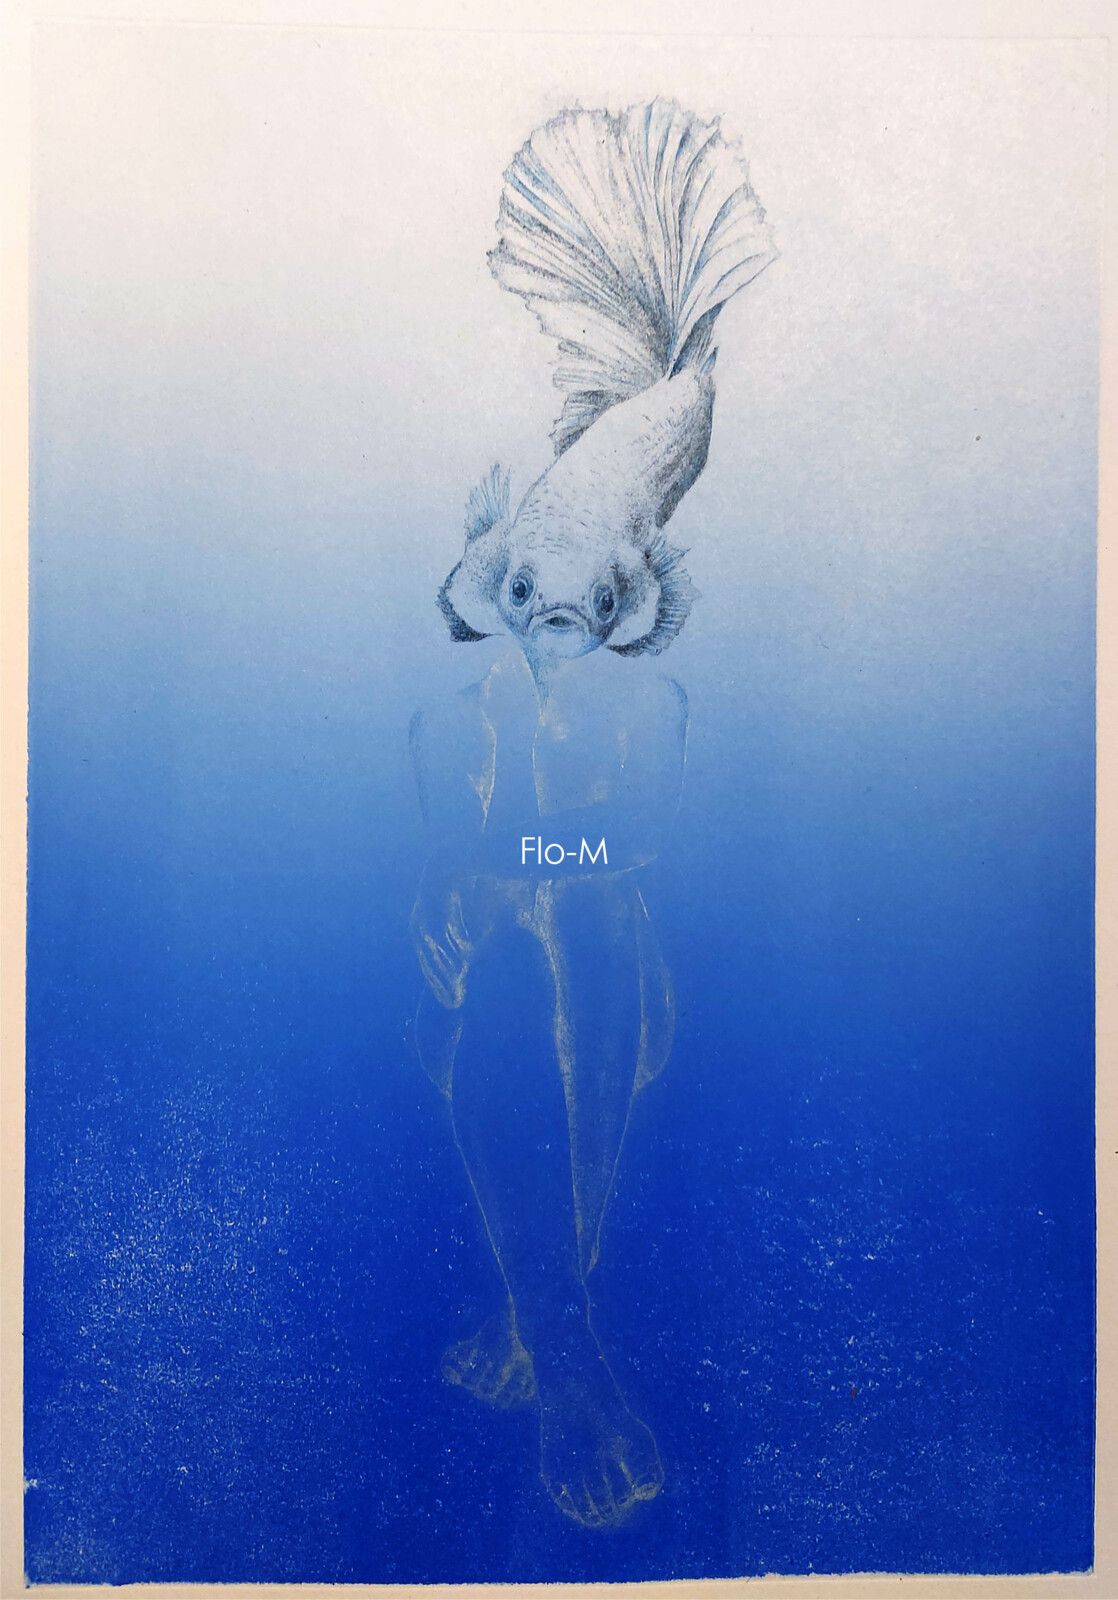 Estampe gravure sirène poisson artiste flo-m nu artistique art contemporain